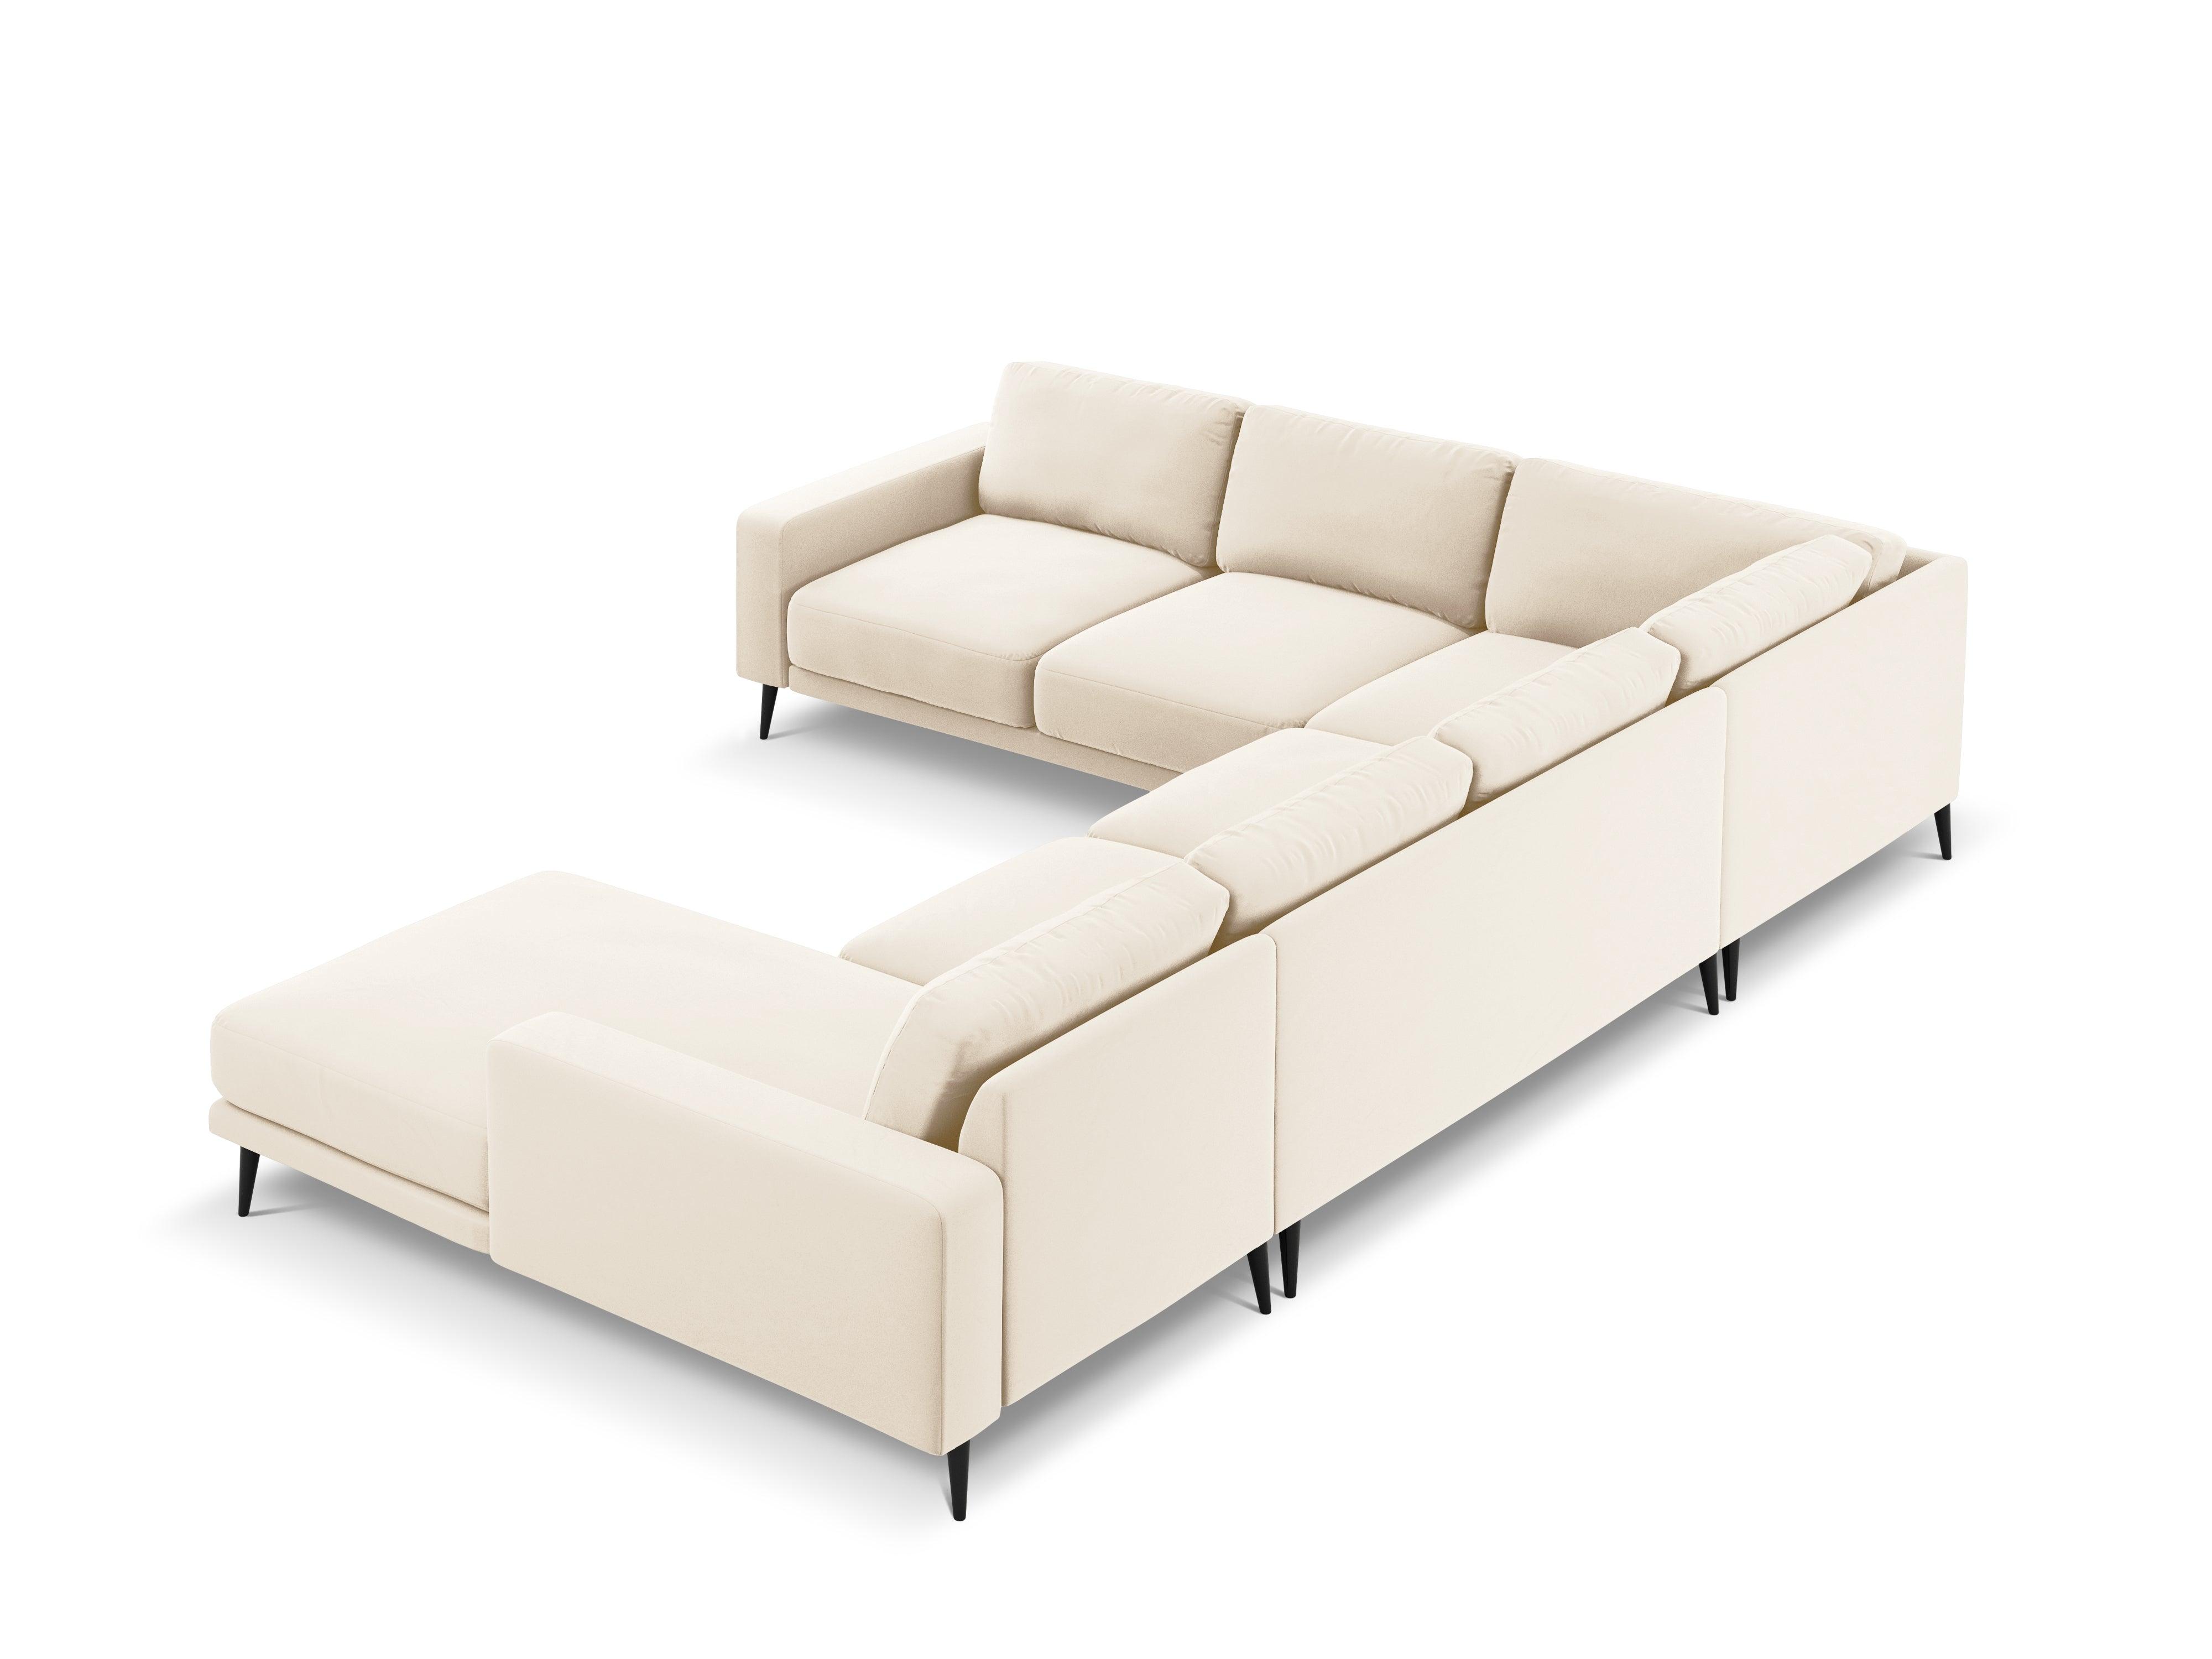 Velvet Panoramic Left Corner Sofa, "Kylie", 7 Seats, 306x236x80
Made in Europe, Micadoni, Eye on Design